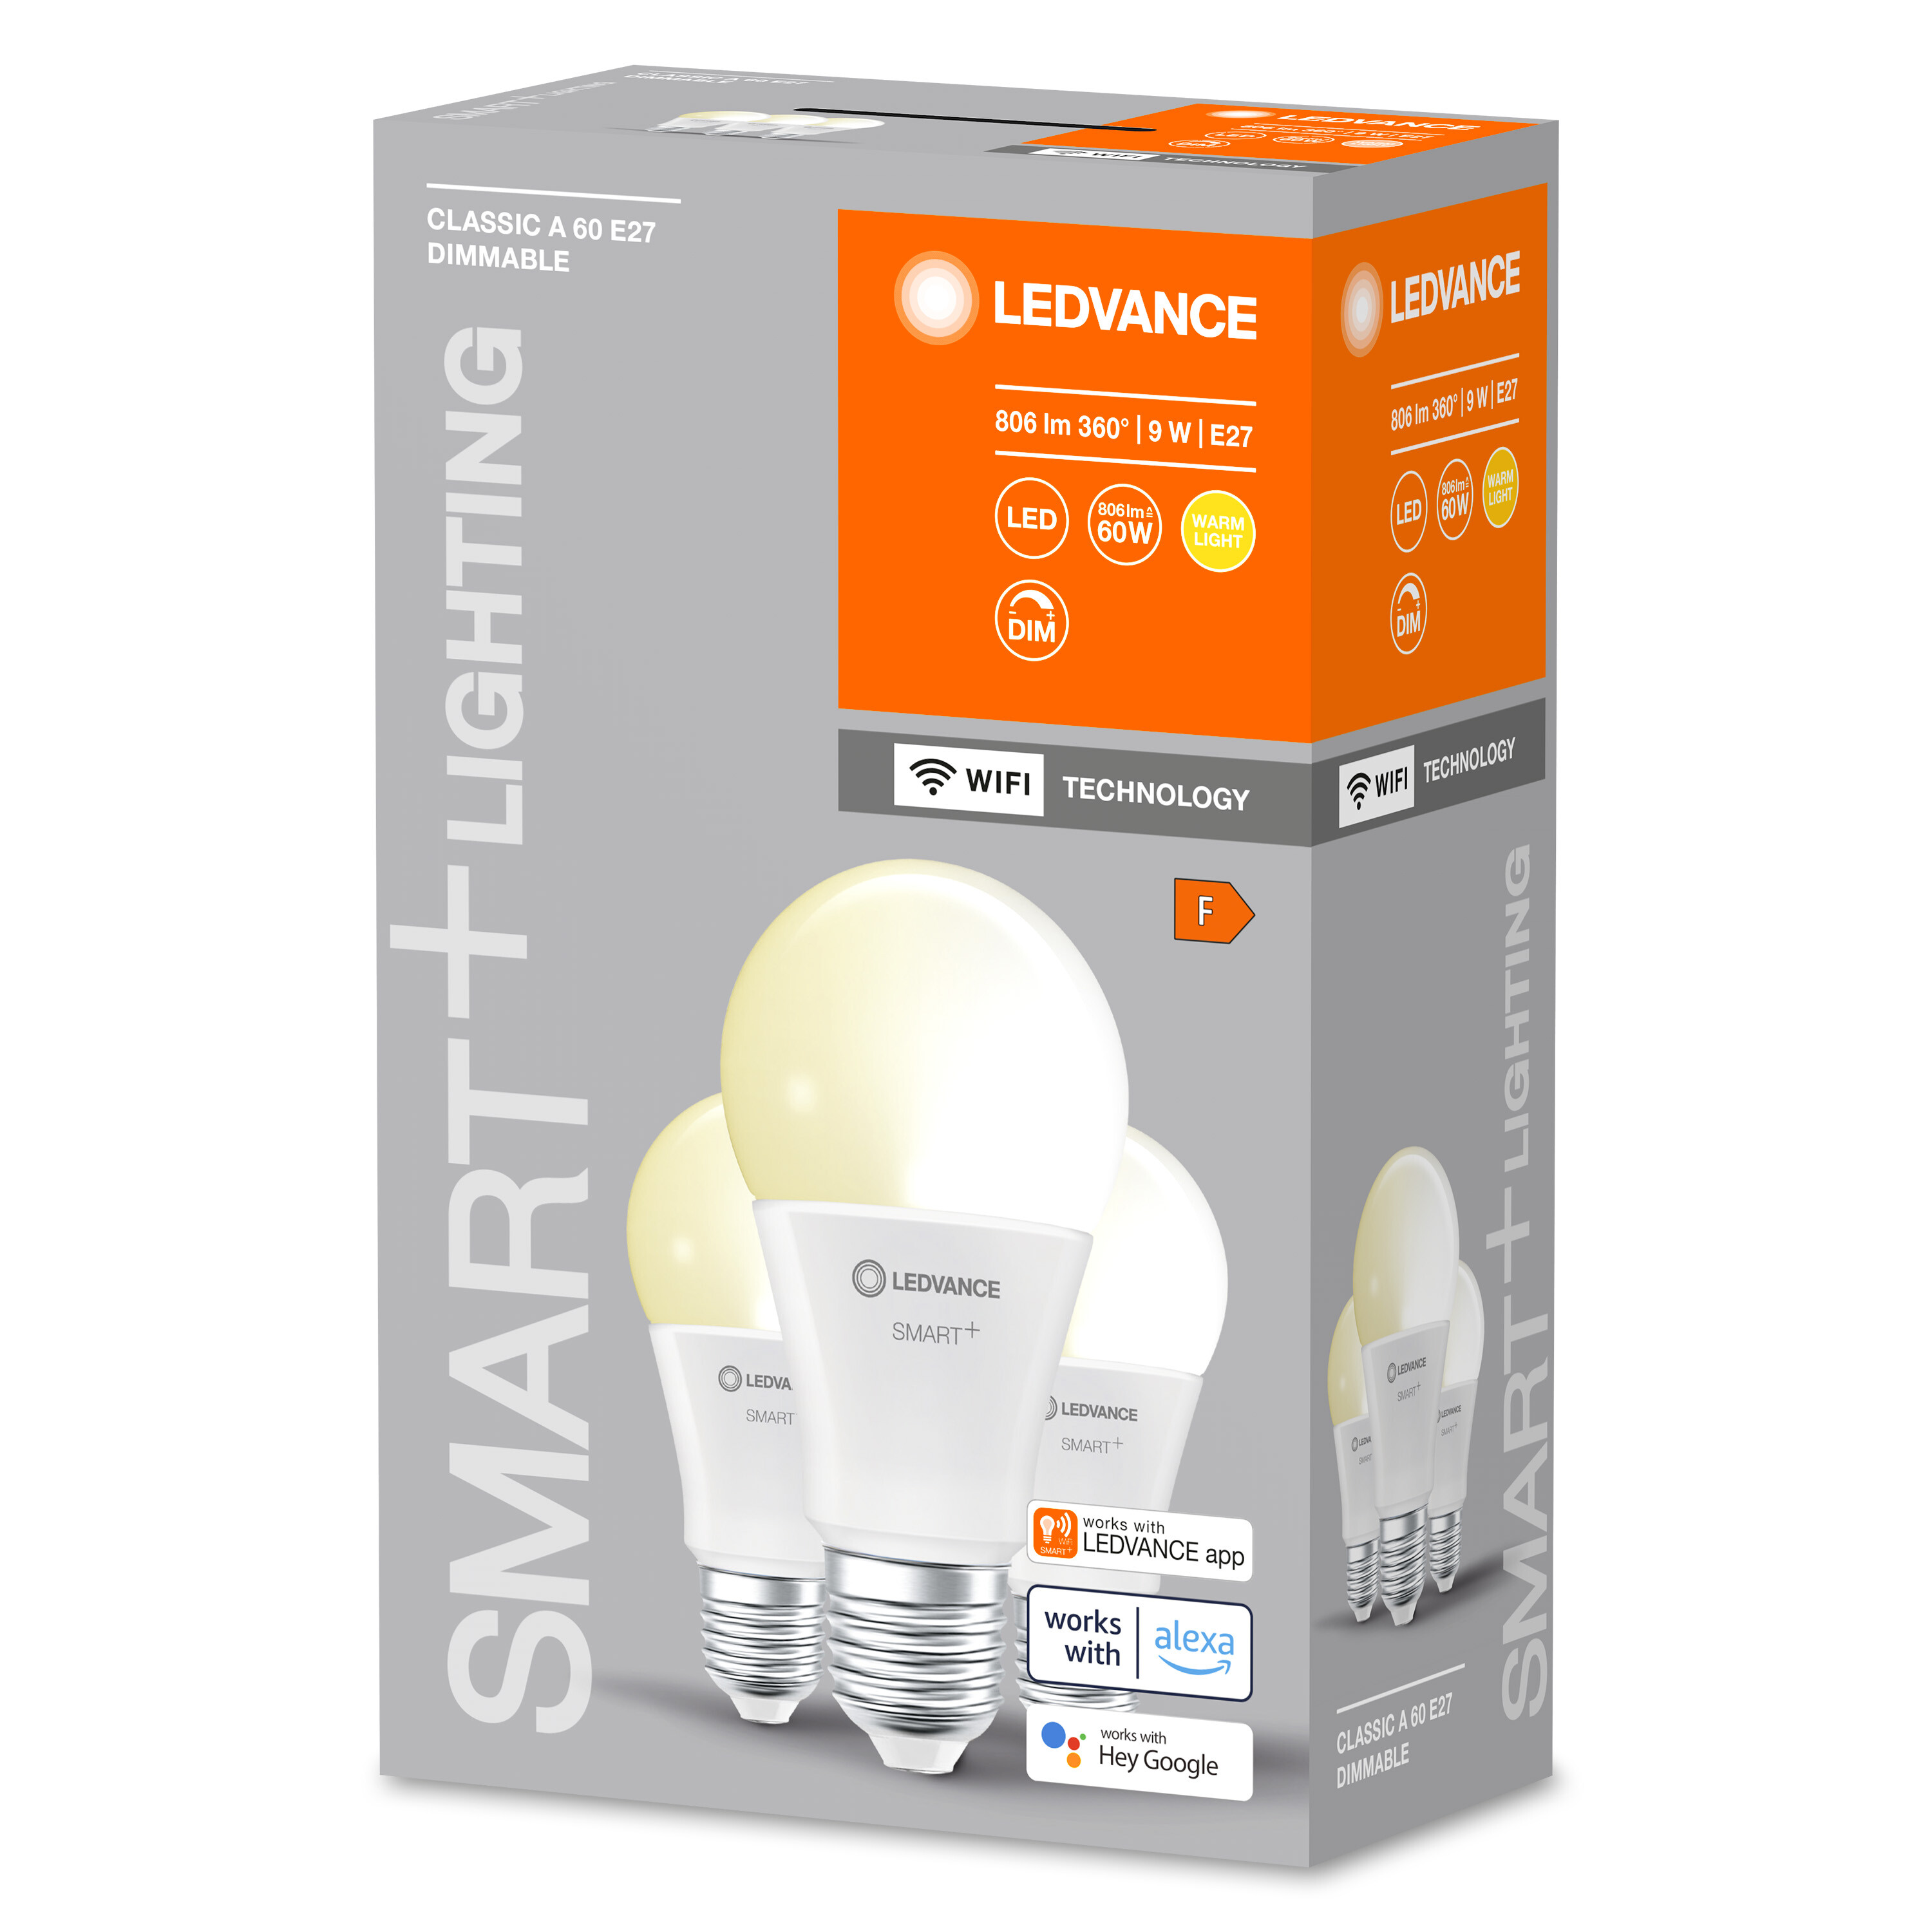 LEDVANCE SMART+ Dimmable Warmweiß Classic Smarte WiFi LED Lampe